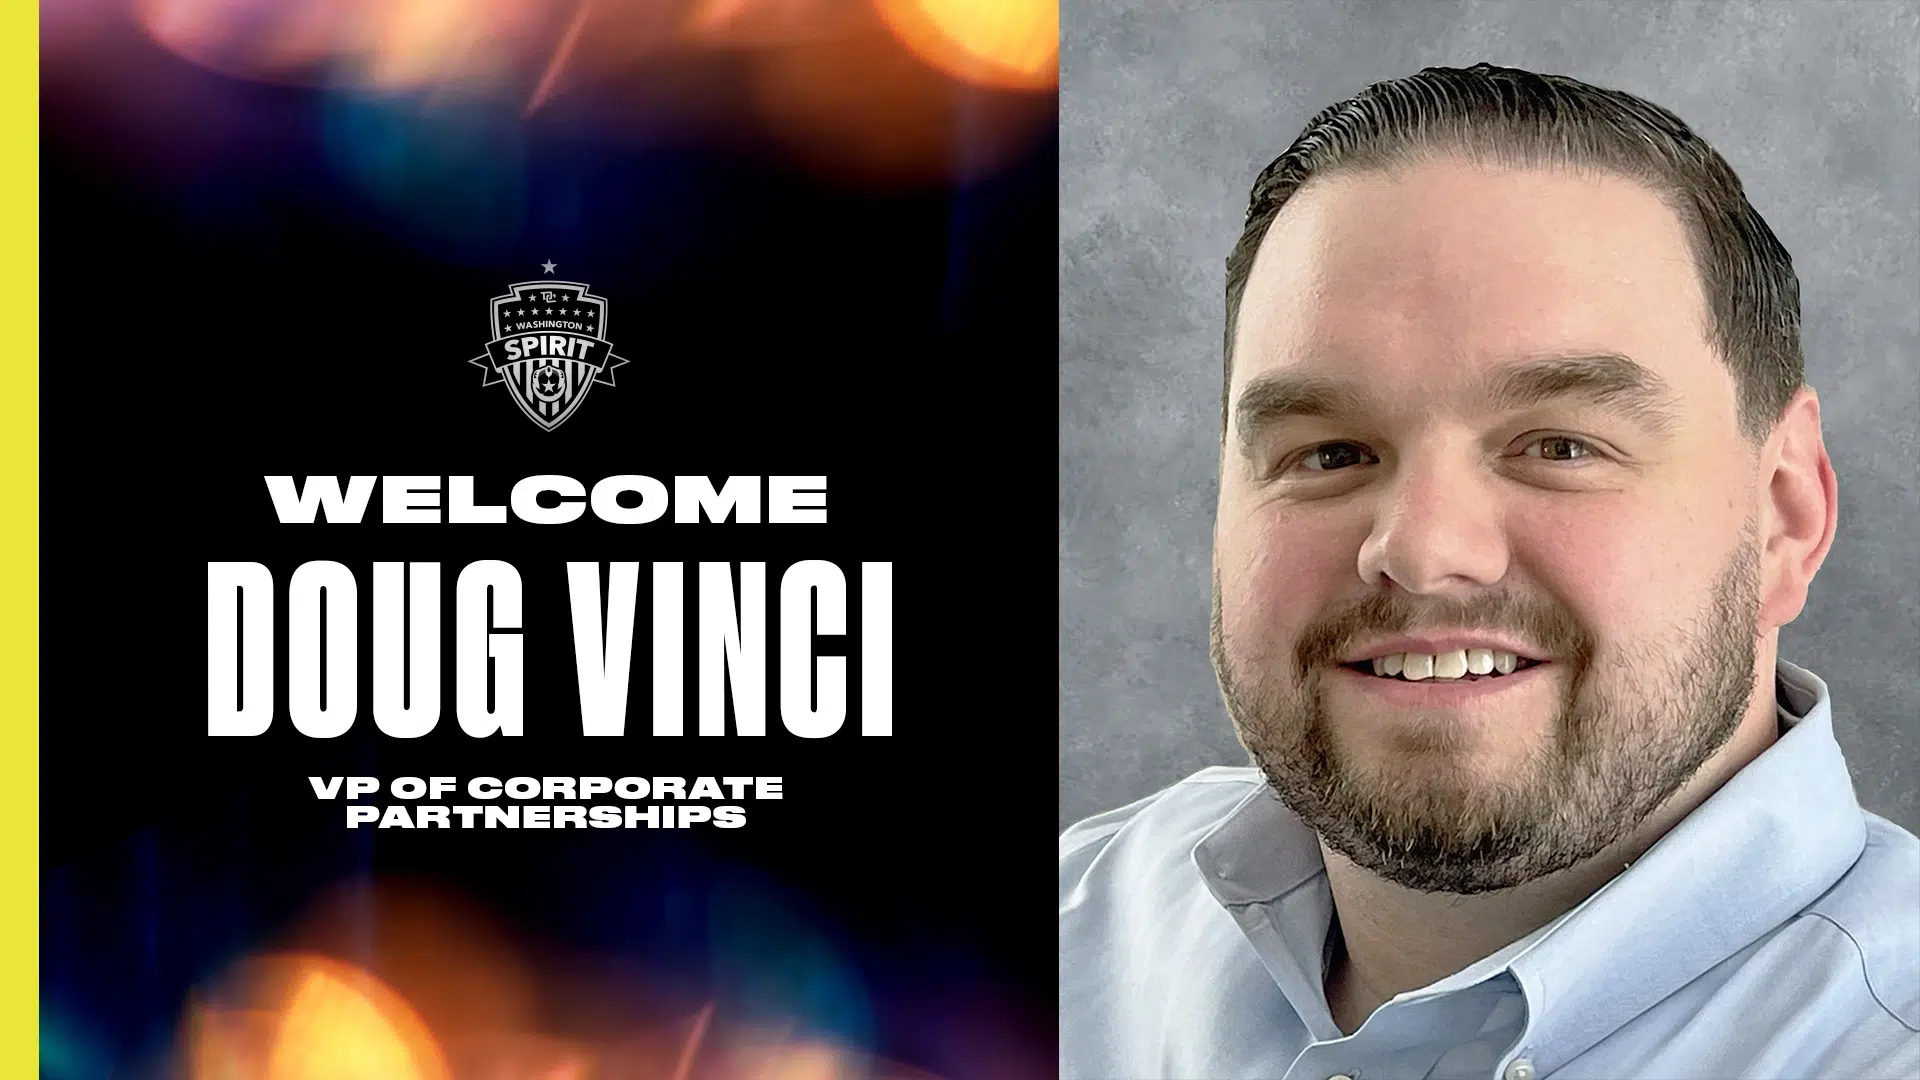 Washington Spirit names Doug Vinci as club’s vice president of corporate partnerships